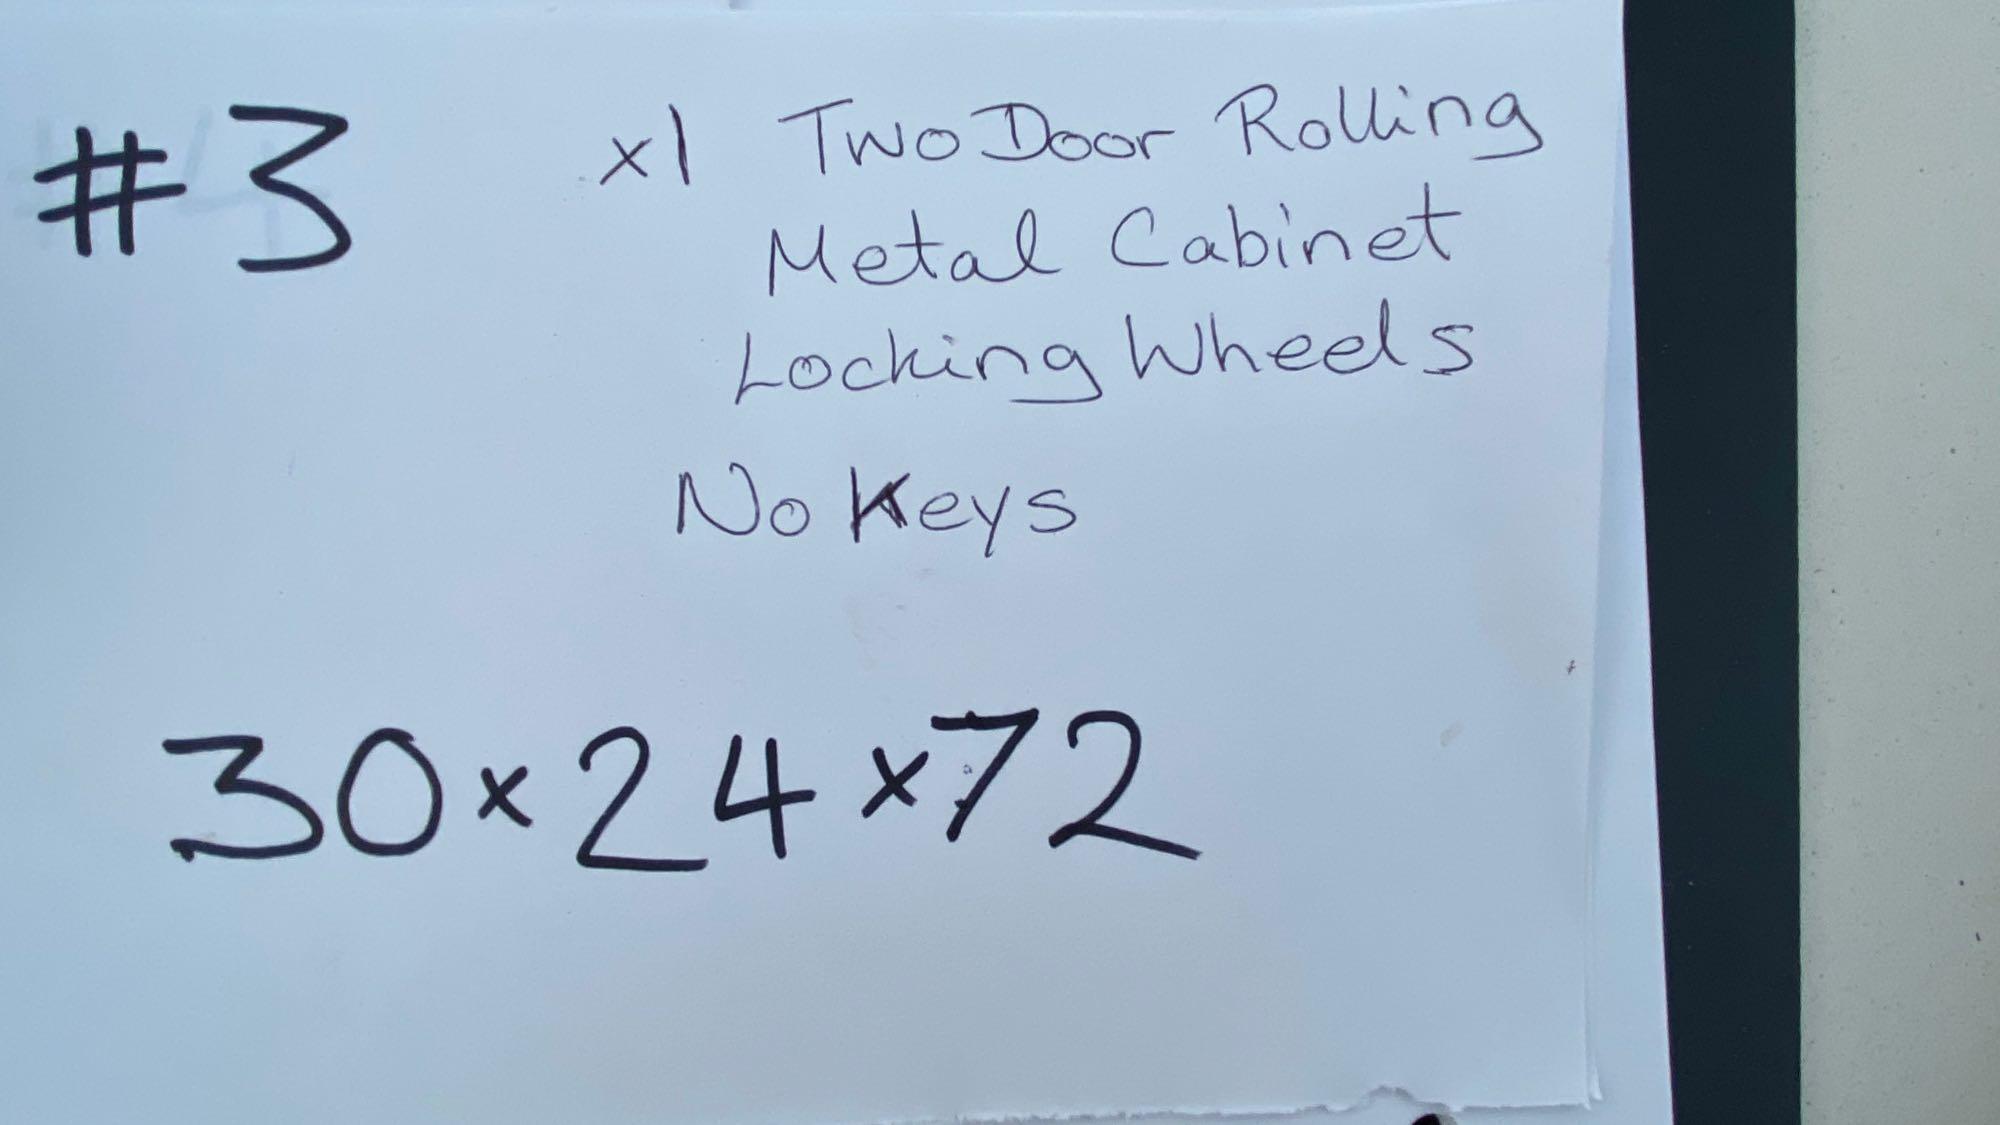 Rolling Two Door Metal Storage Cabinet - No Keys - Locking Wheels - 1 PC